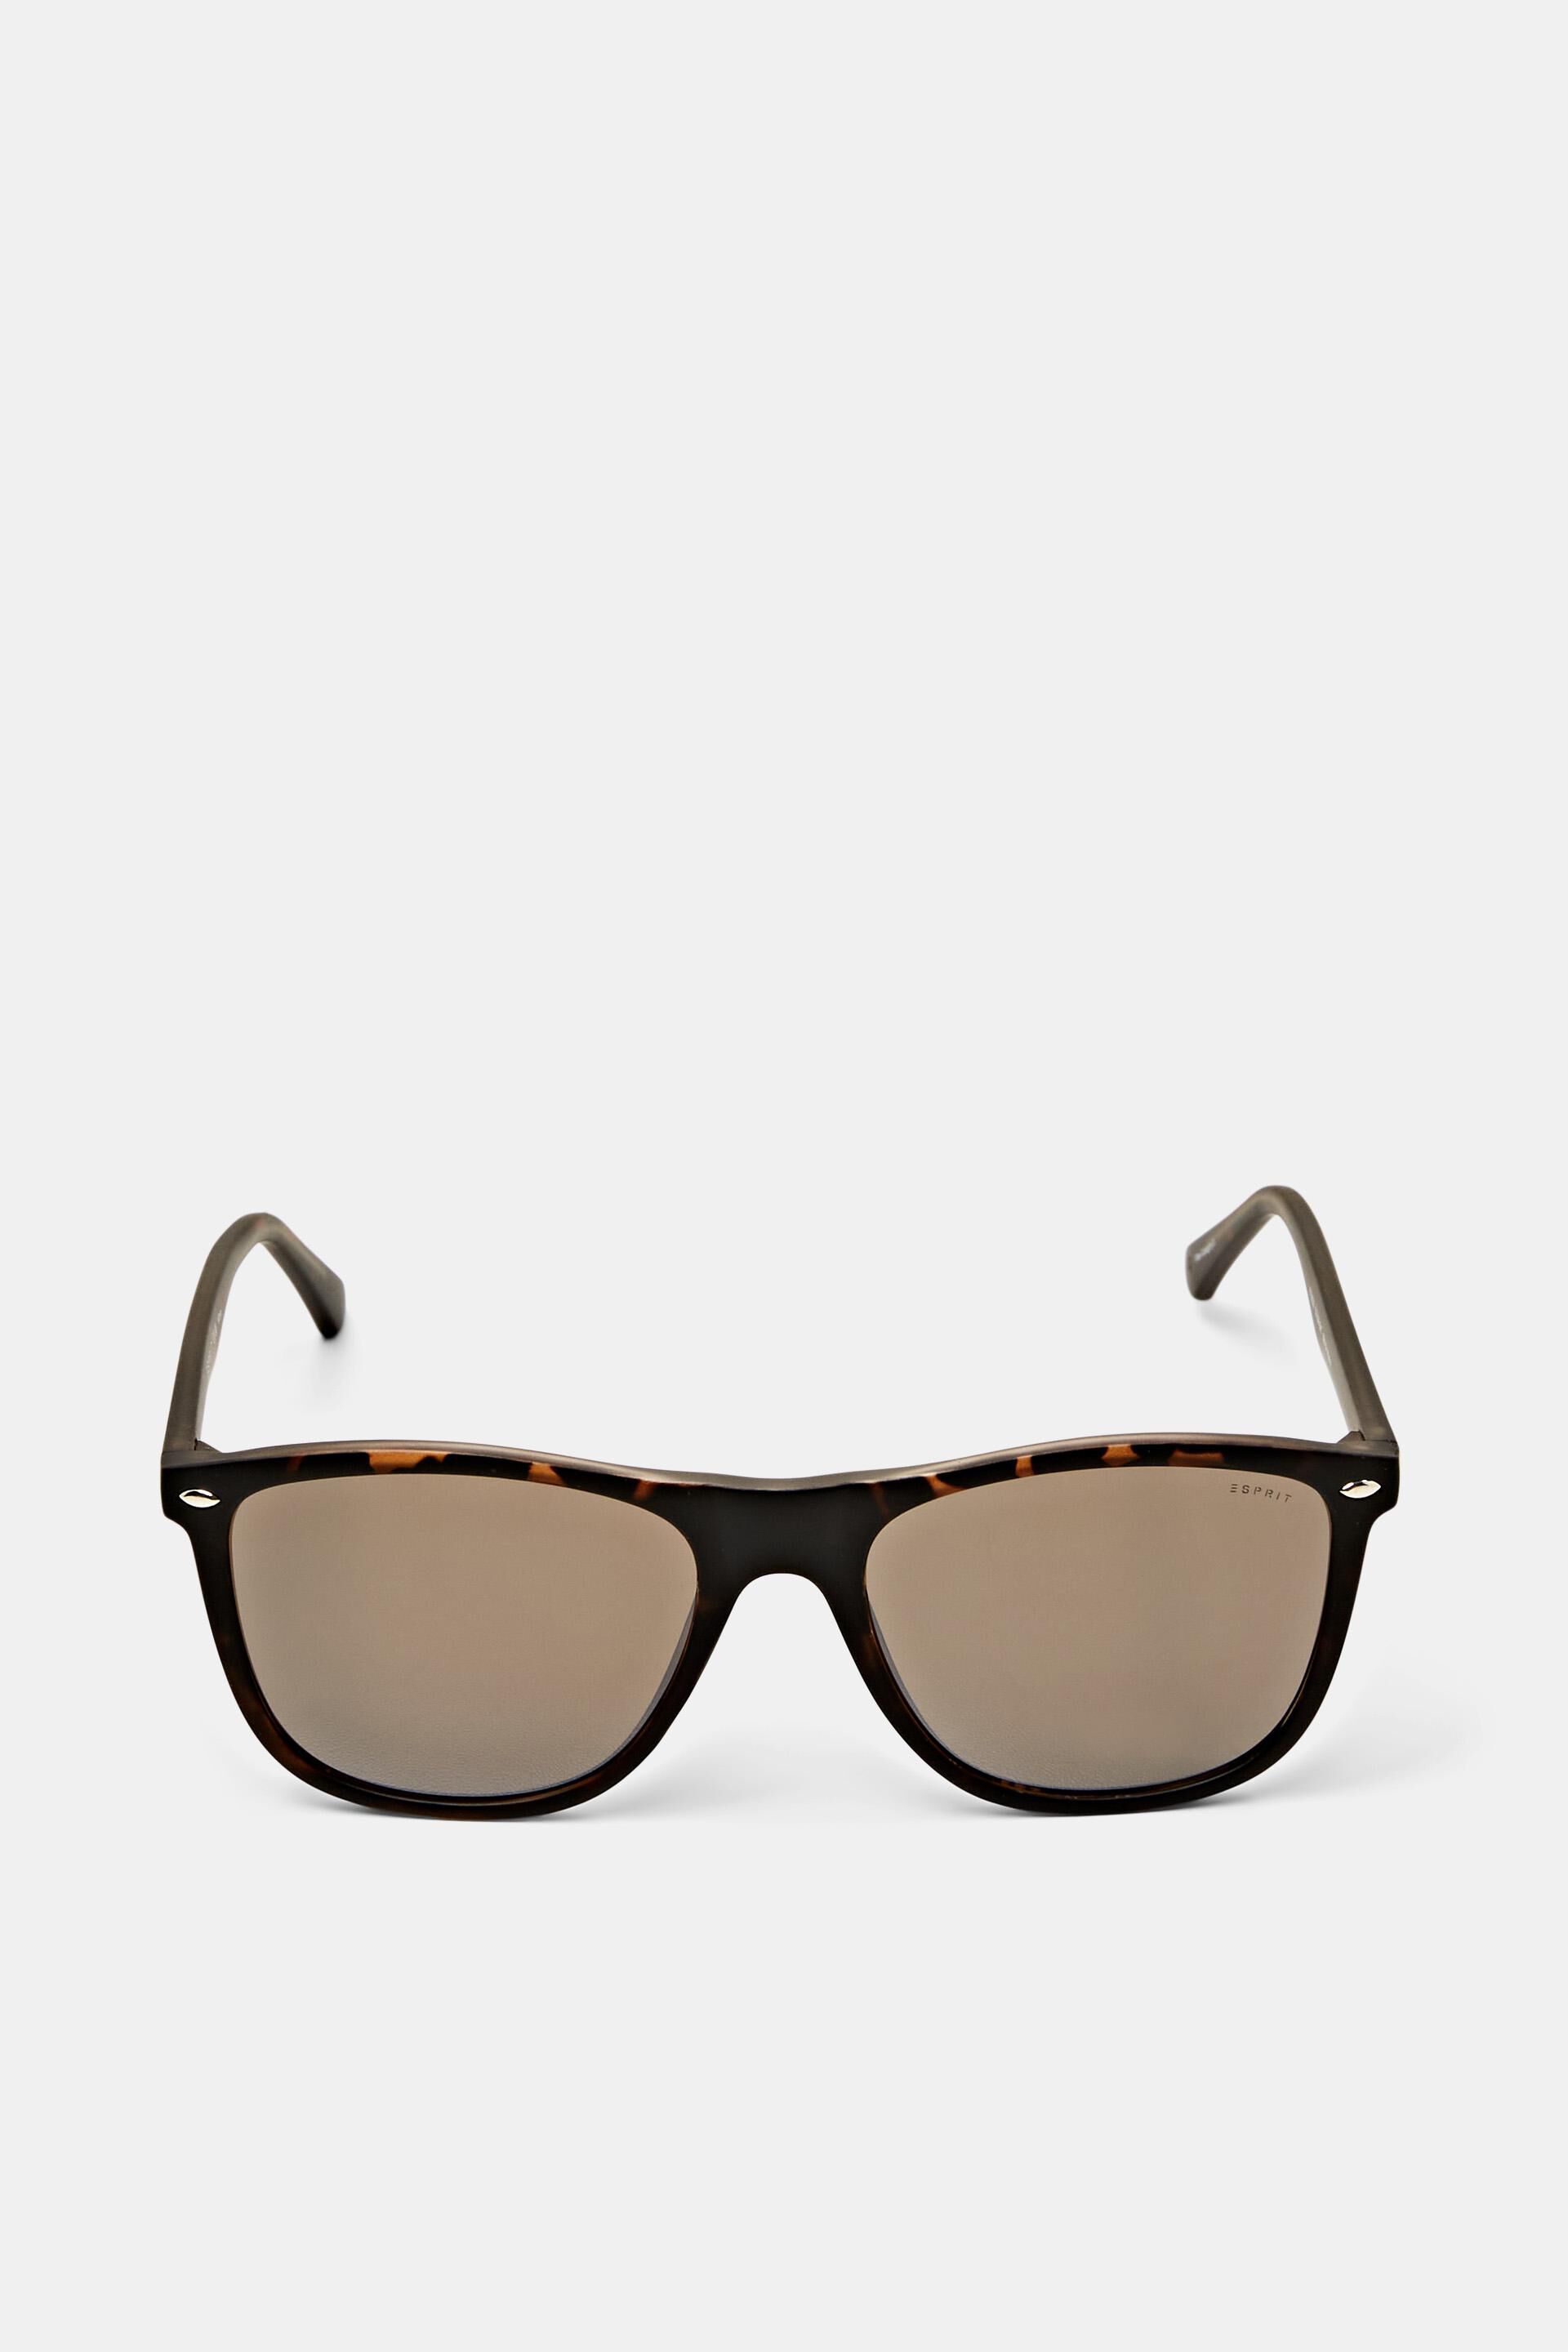 Esprit frame sunglasses Square